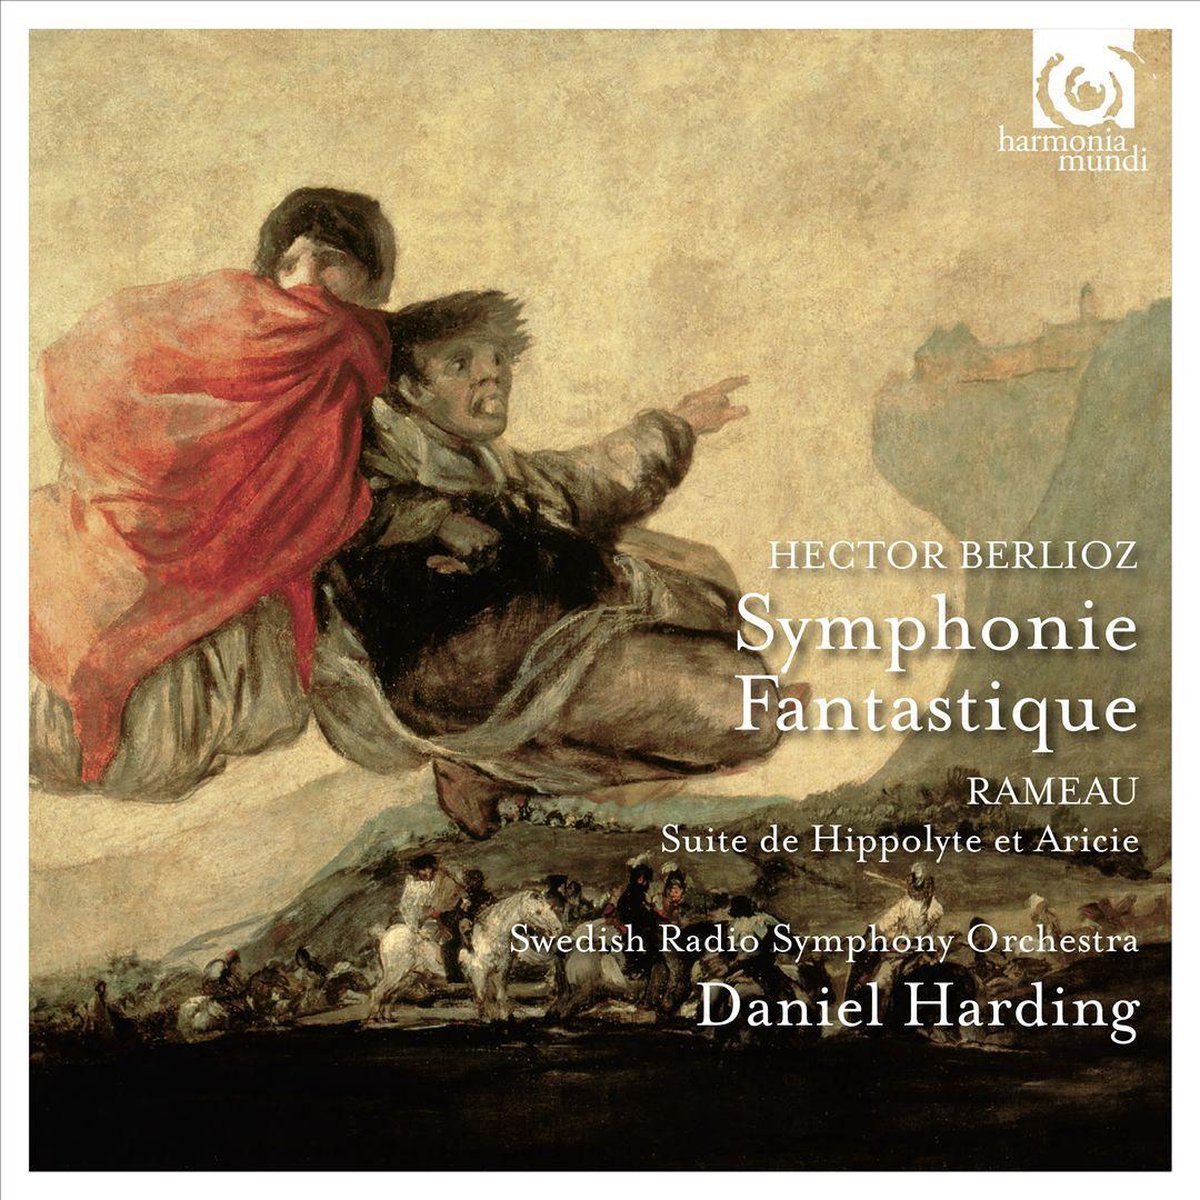 Berlioz: Symphonie Fantastique. Rameau: Suite de Hyppolyte et Aricie | Hector Berlioz, Jean Philippe Rameau, Swedish Radio Symphony Orchestra